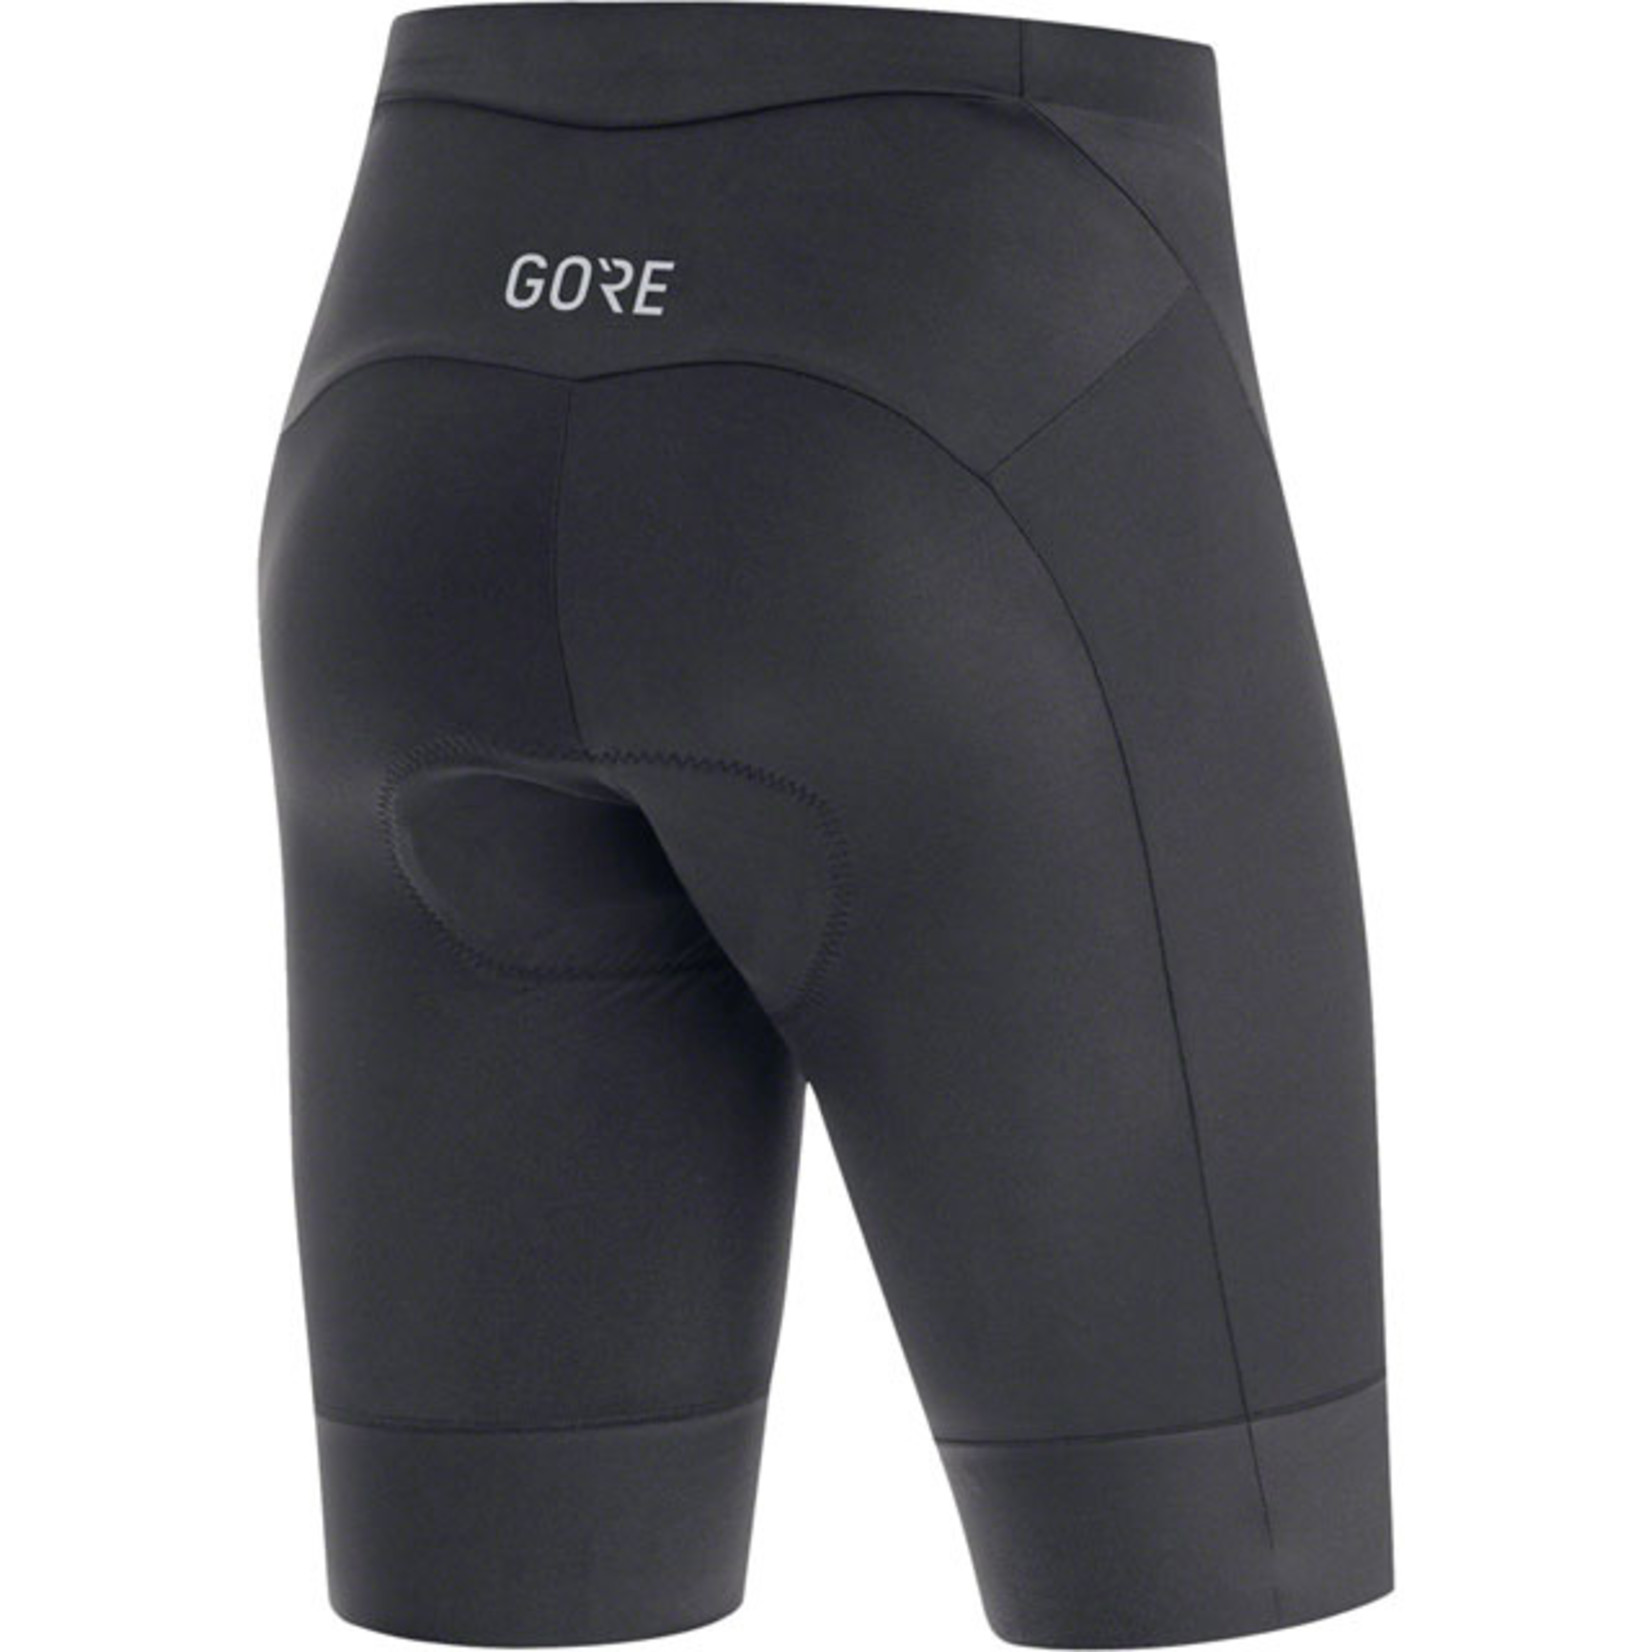 GORE GORE C3 Short Tights + - Black, Large, Women's